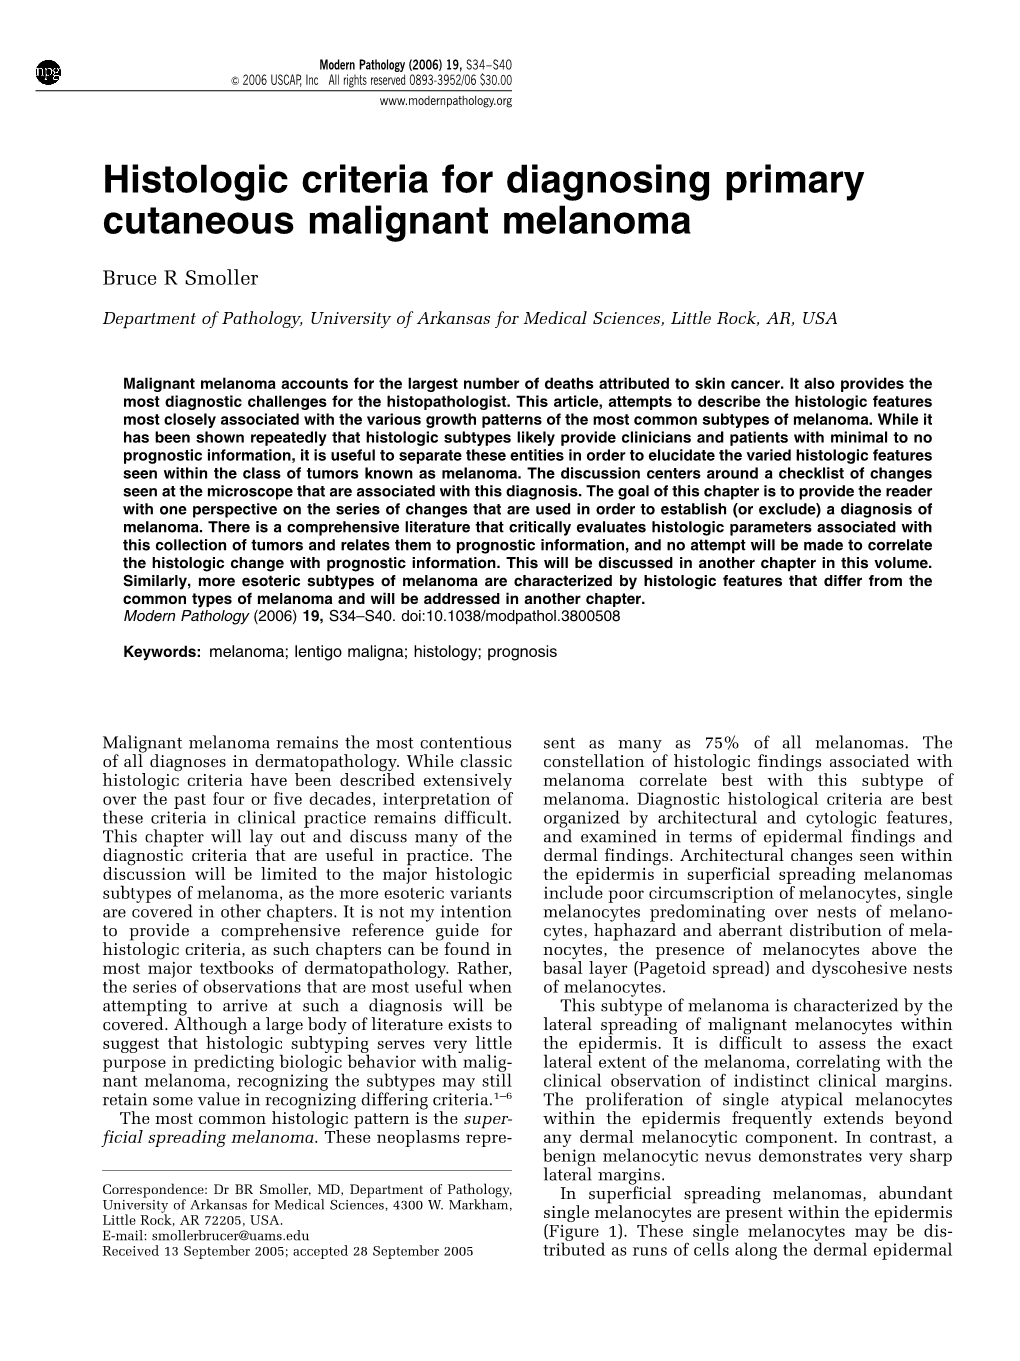 Histologic Criteria for Diagnosing Primary Cutaneous Malignant Melanoma